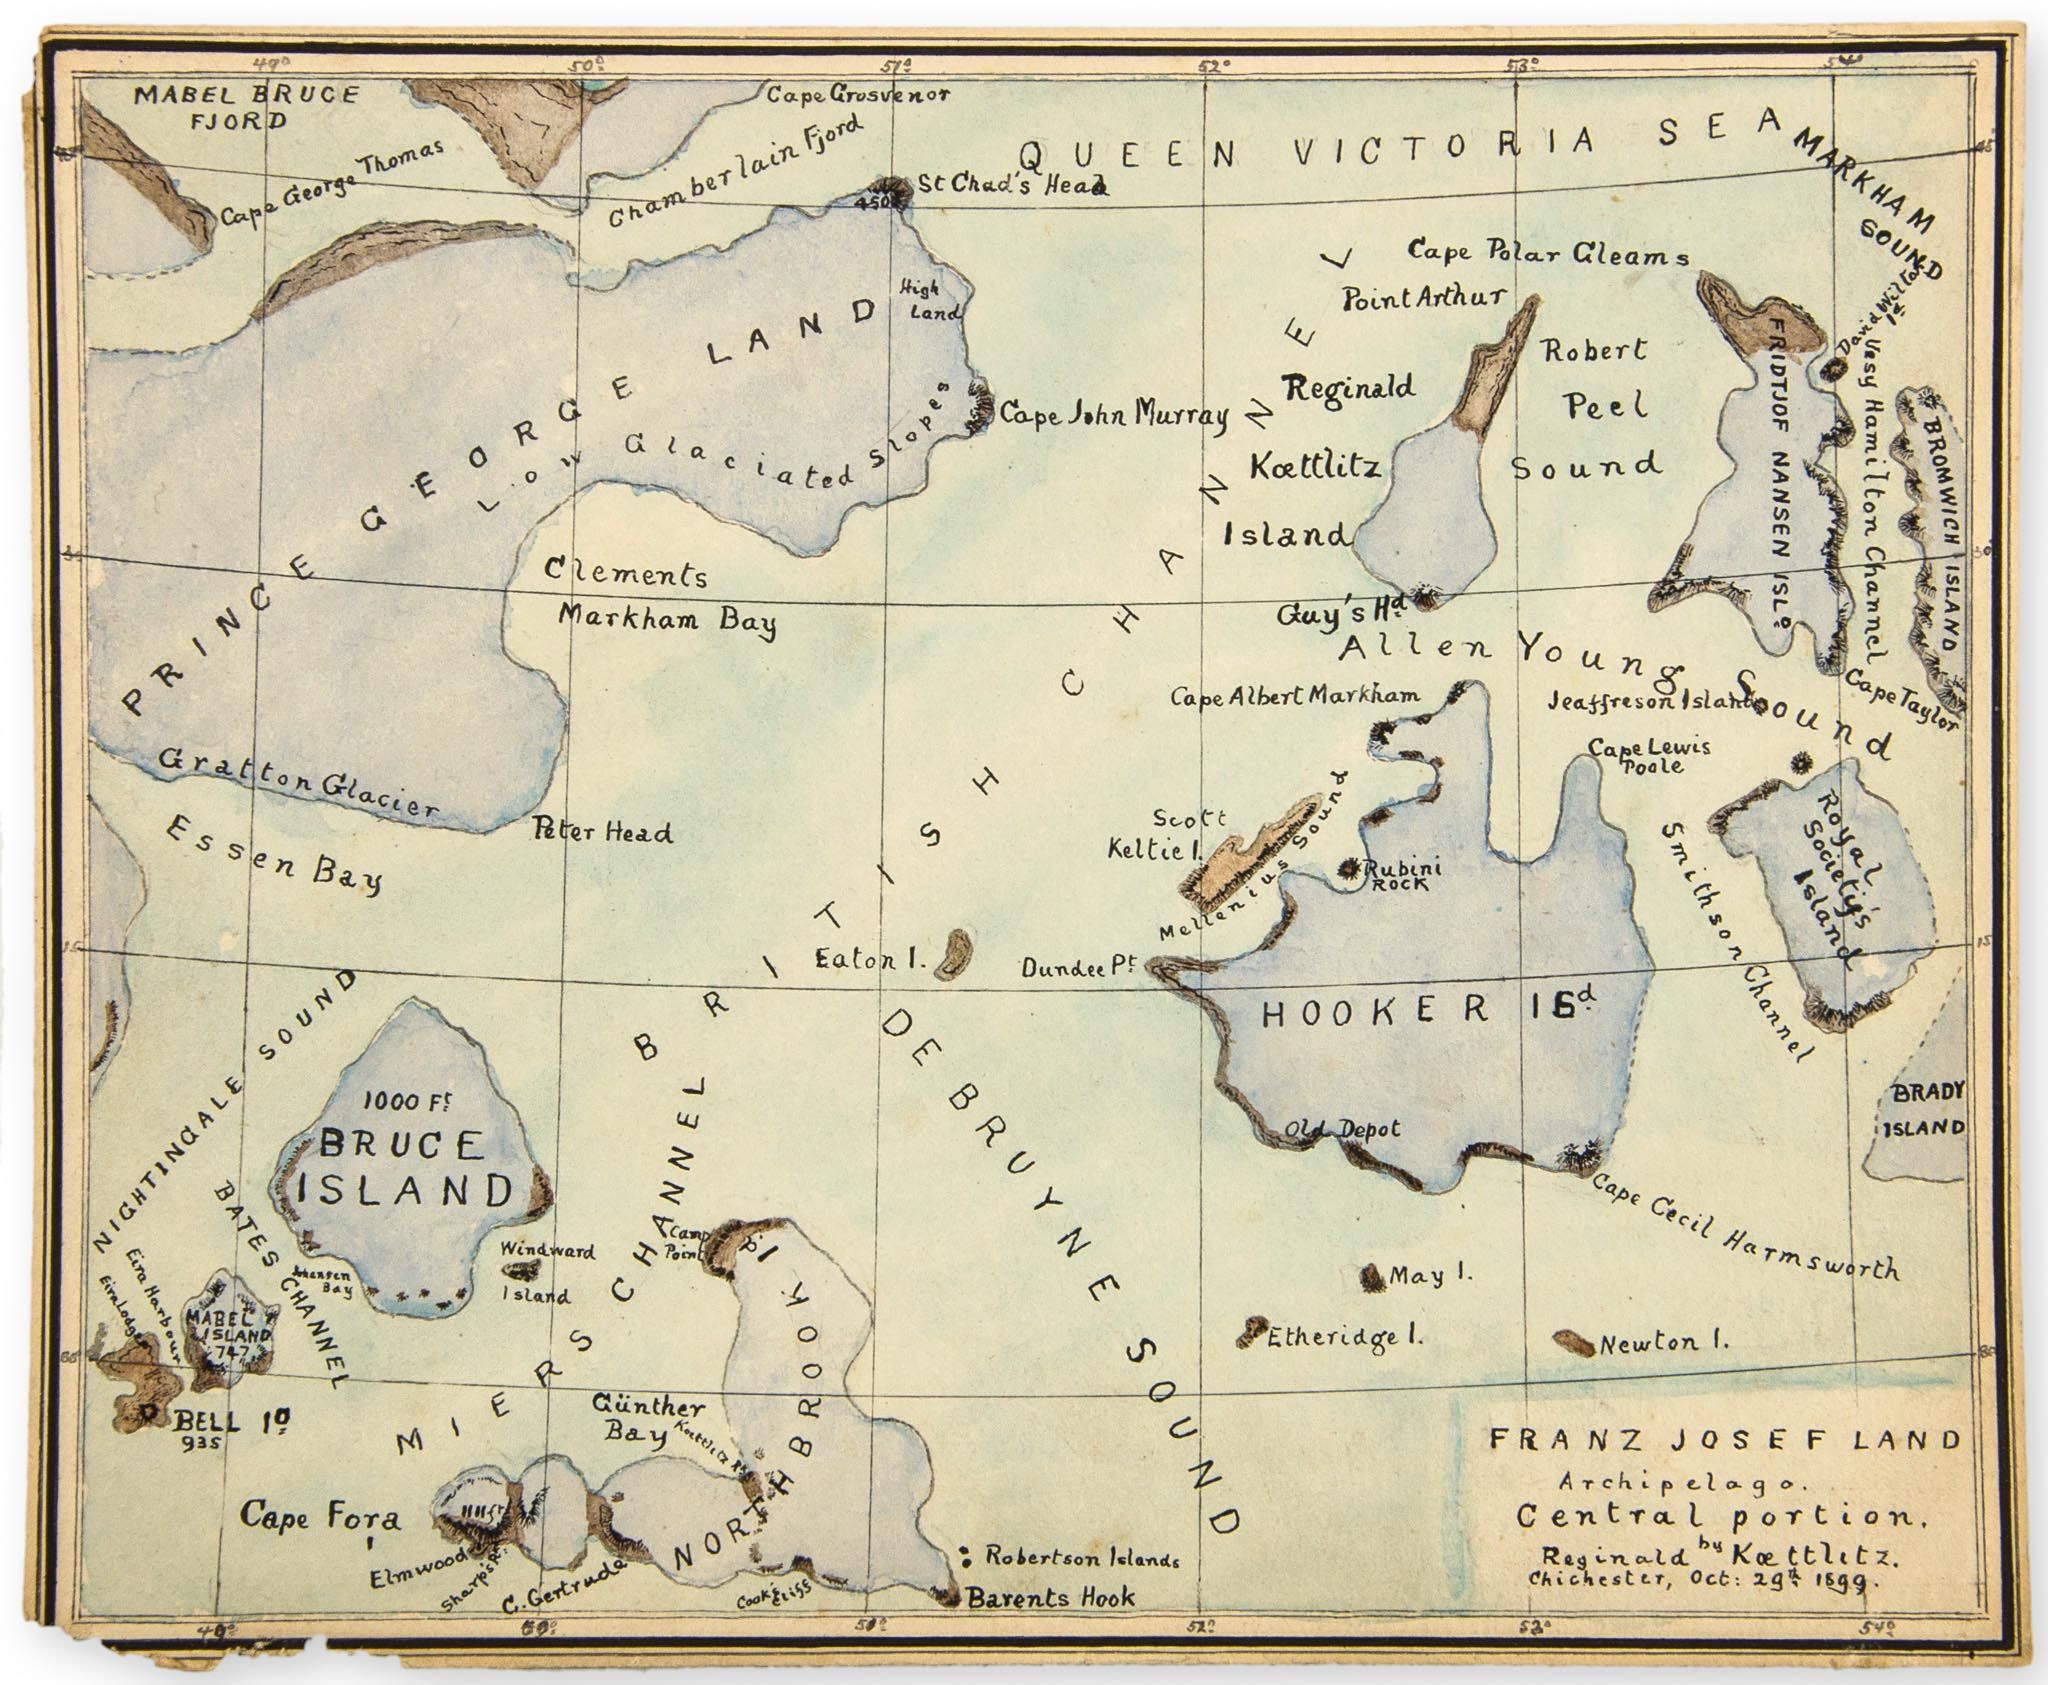 Franz Josef Land Archipelago. Central portion, watercolour map (Reginald, physician and polar